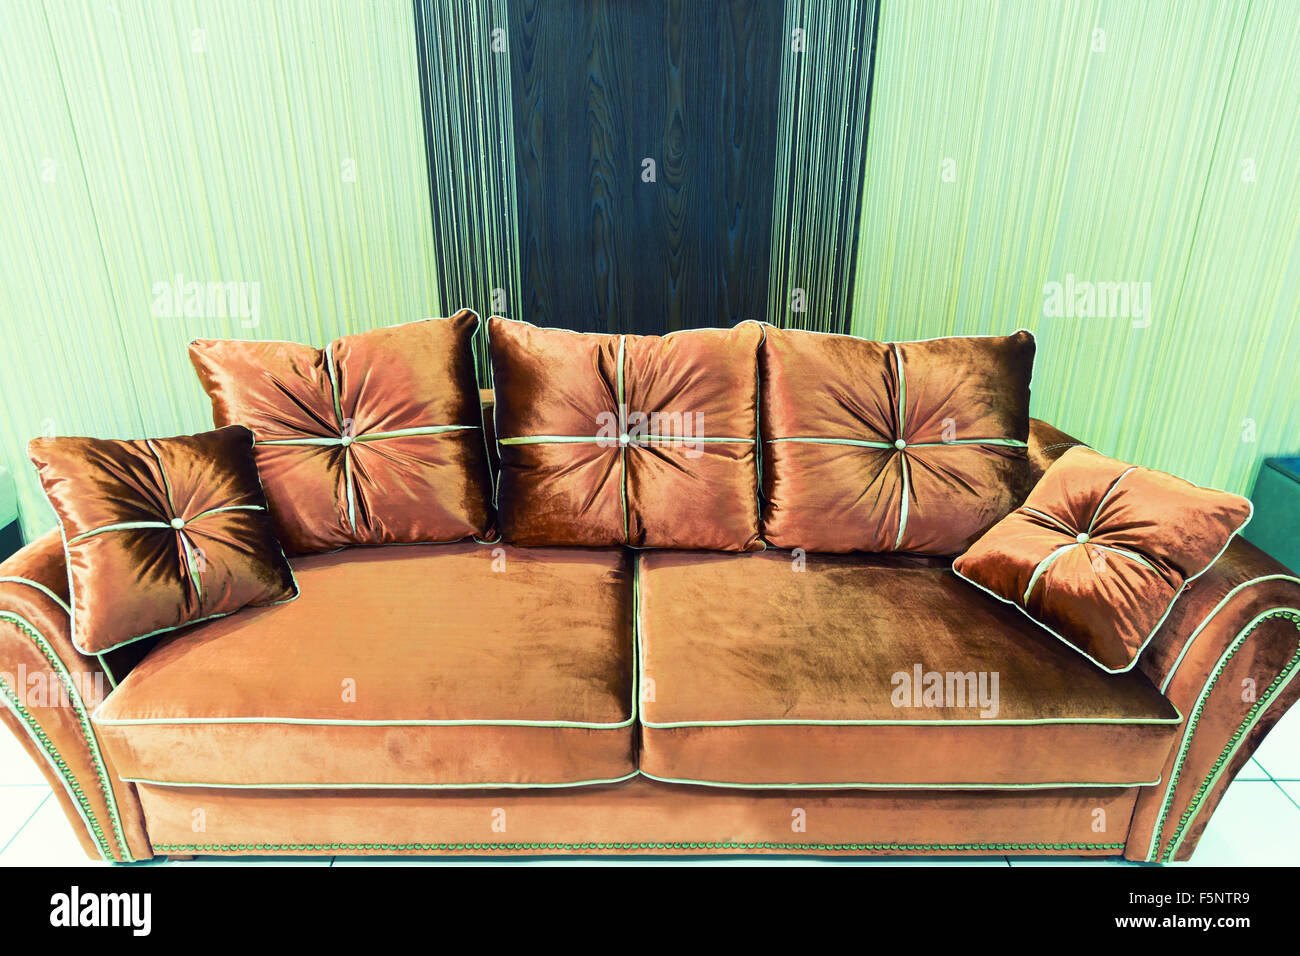 Velvet Pillows On The Brown Big Sofa Stock Photo 89605581 Alamy